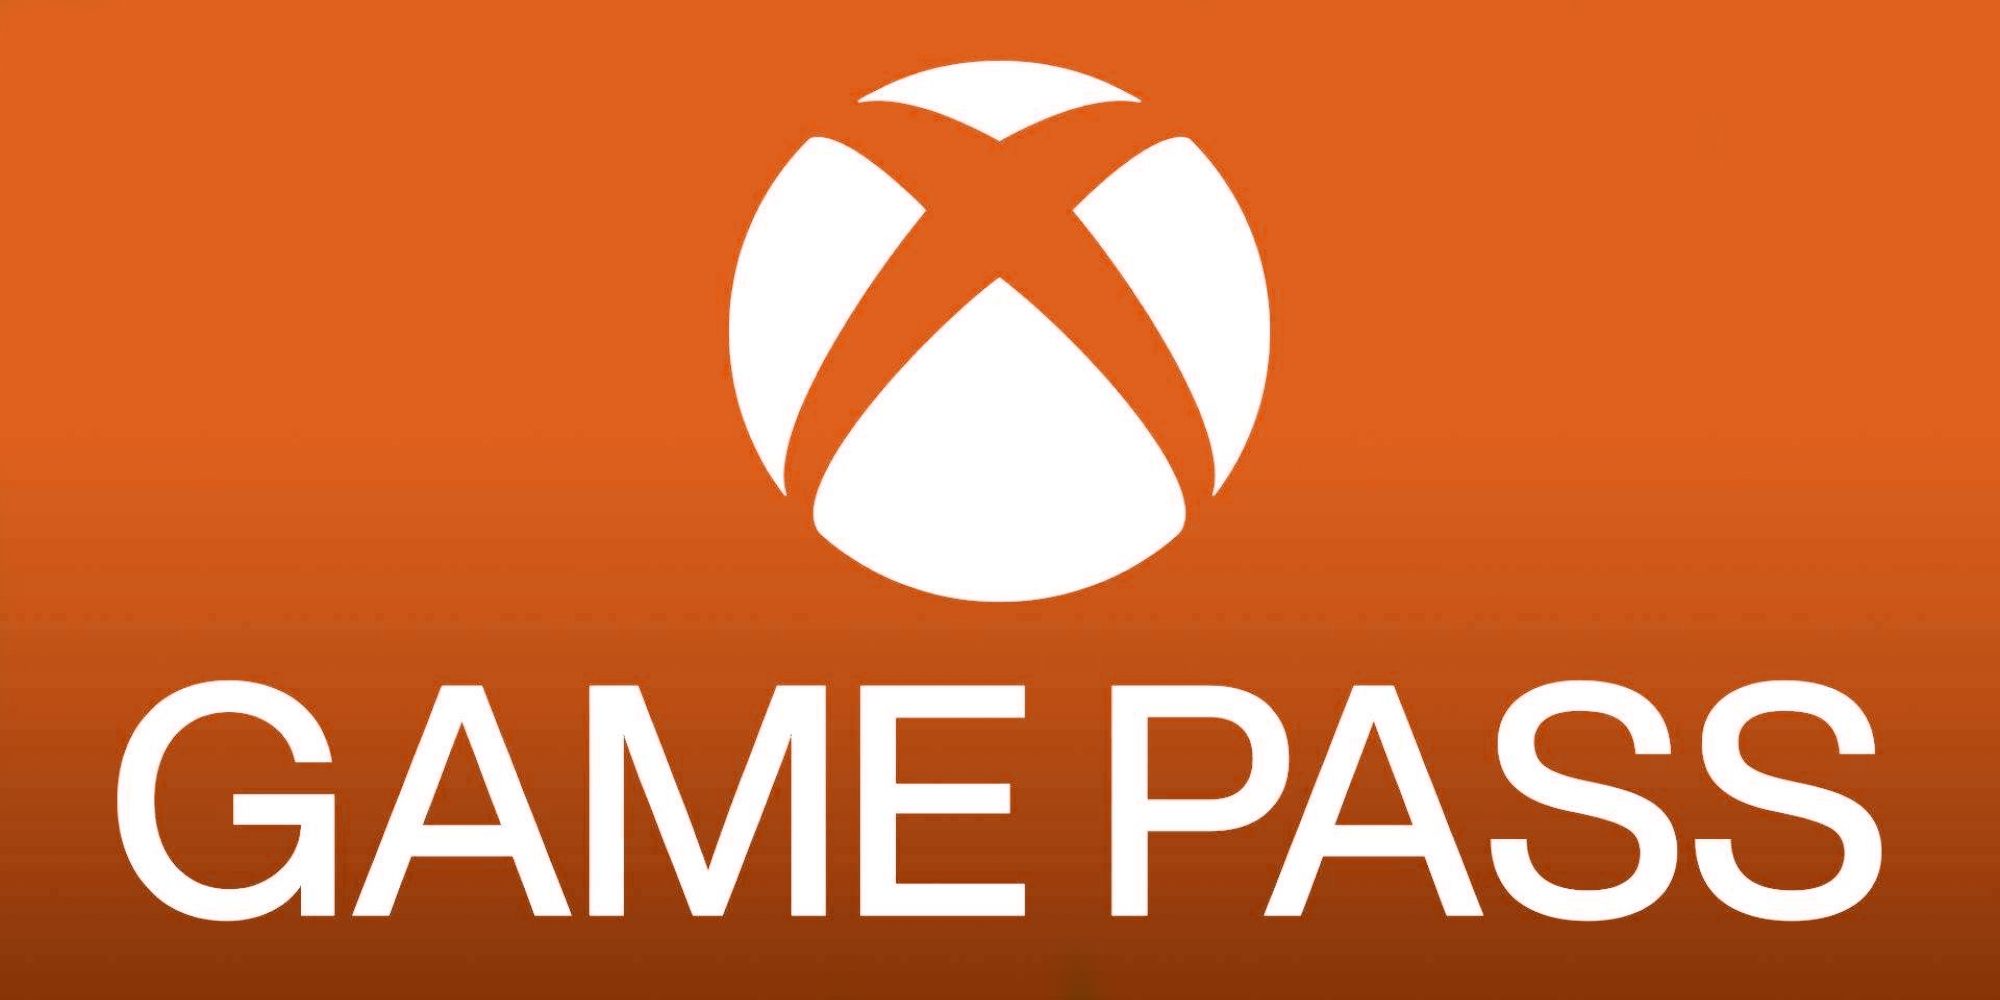 Xbox Game Pass logo in orange